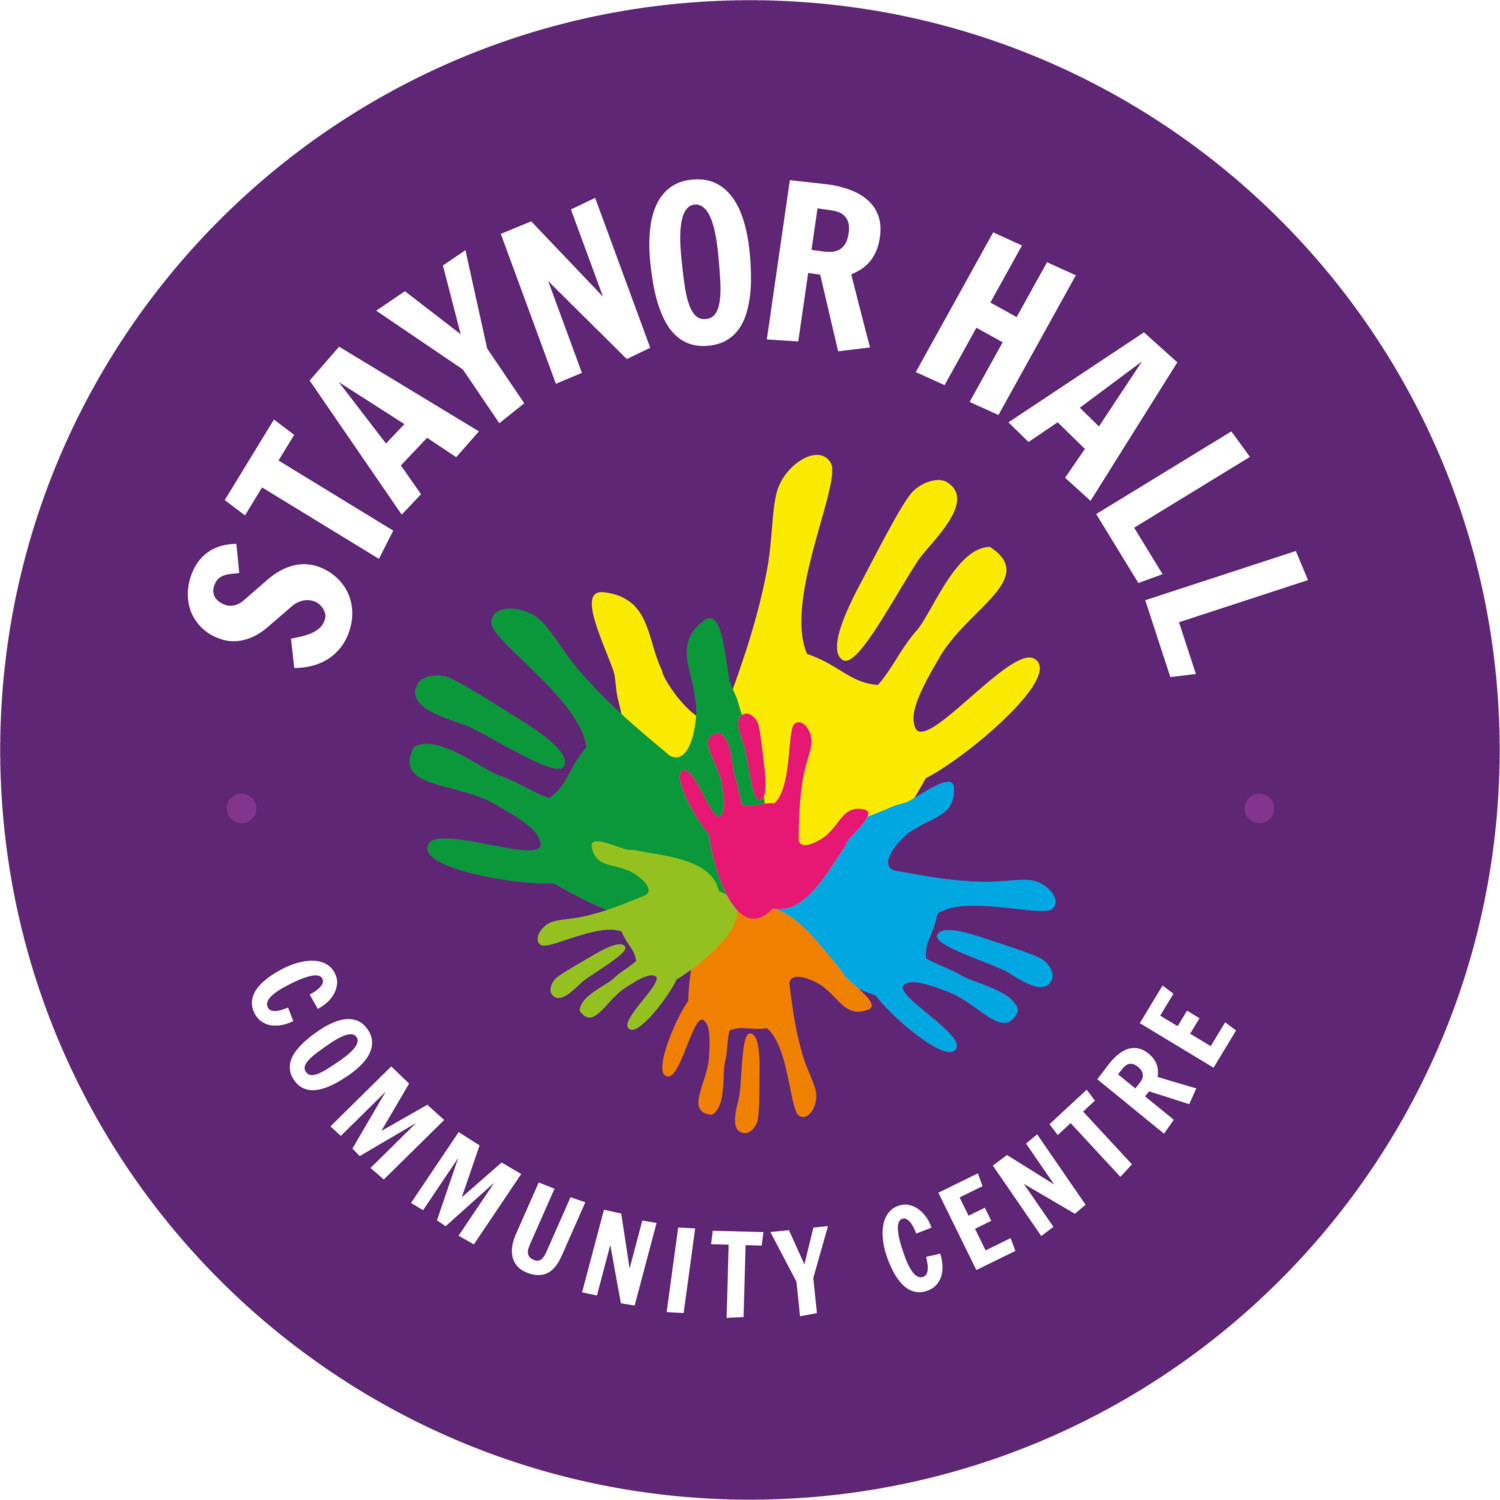 Staynor Hall Community Centre